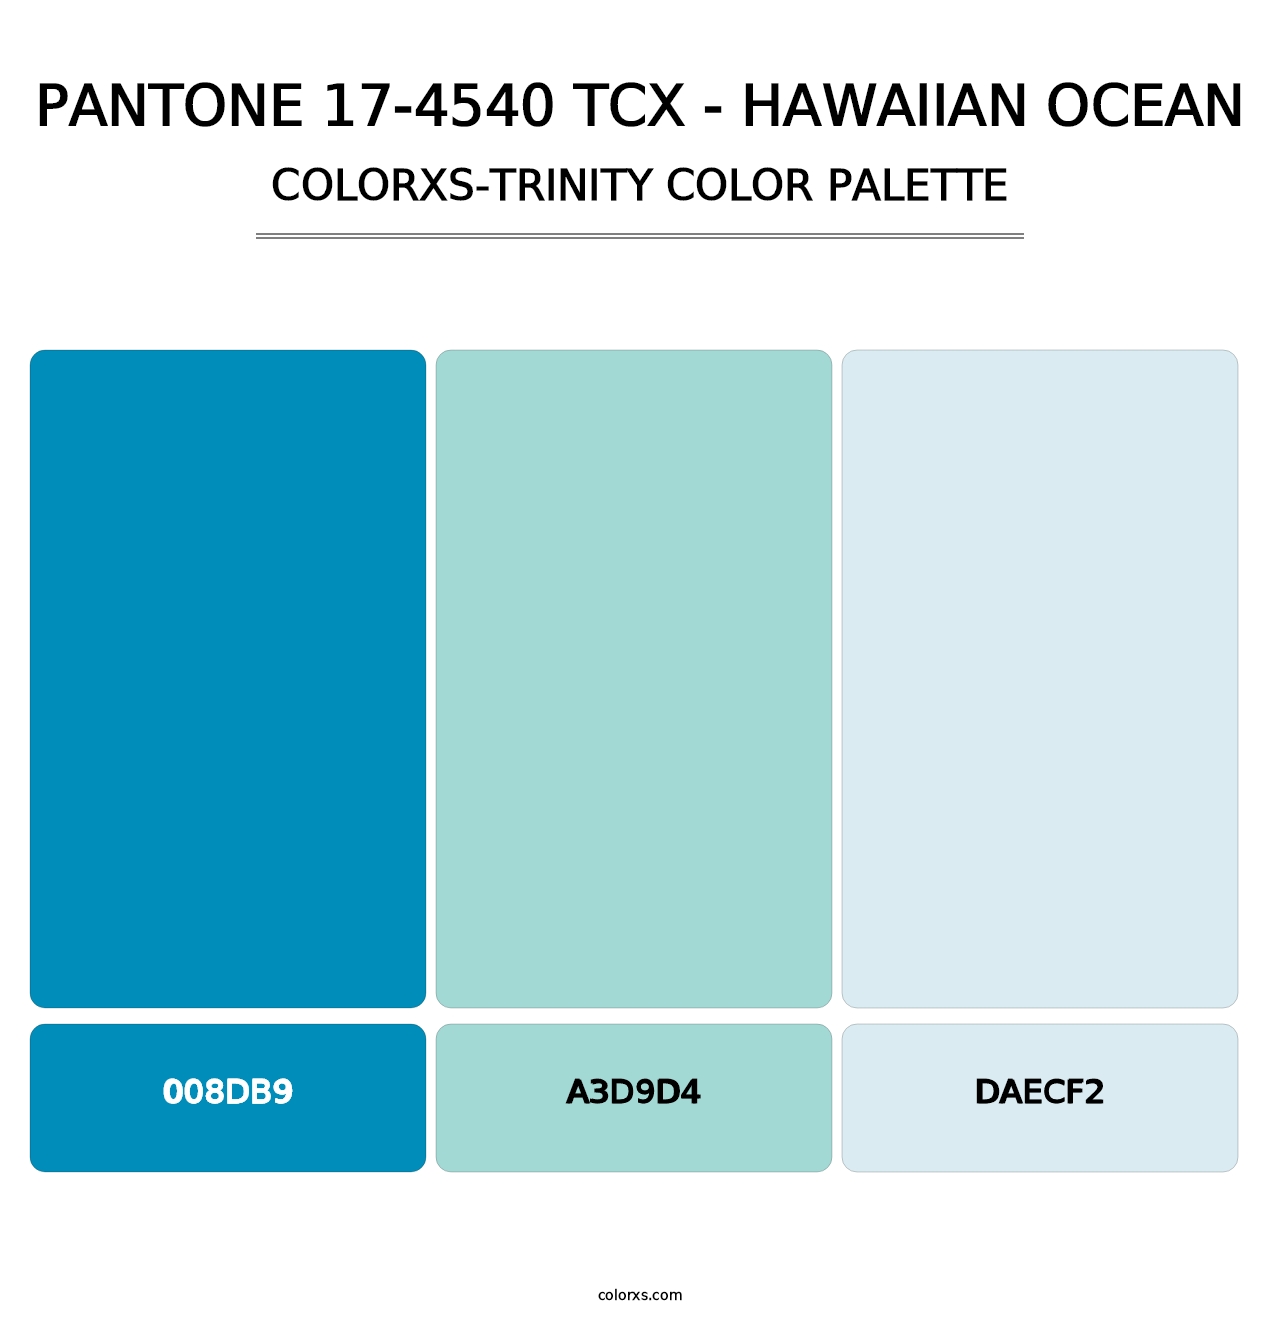 PANTONE 17-4540 TCX - Hawaiian Ocean - Colorxs Trinity Palette